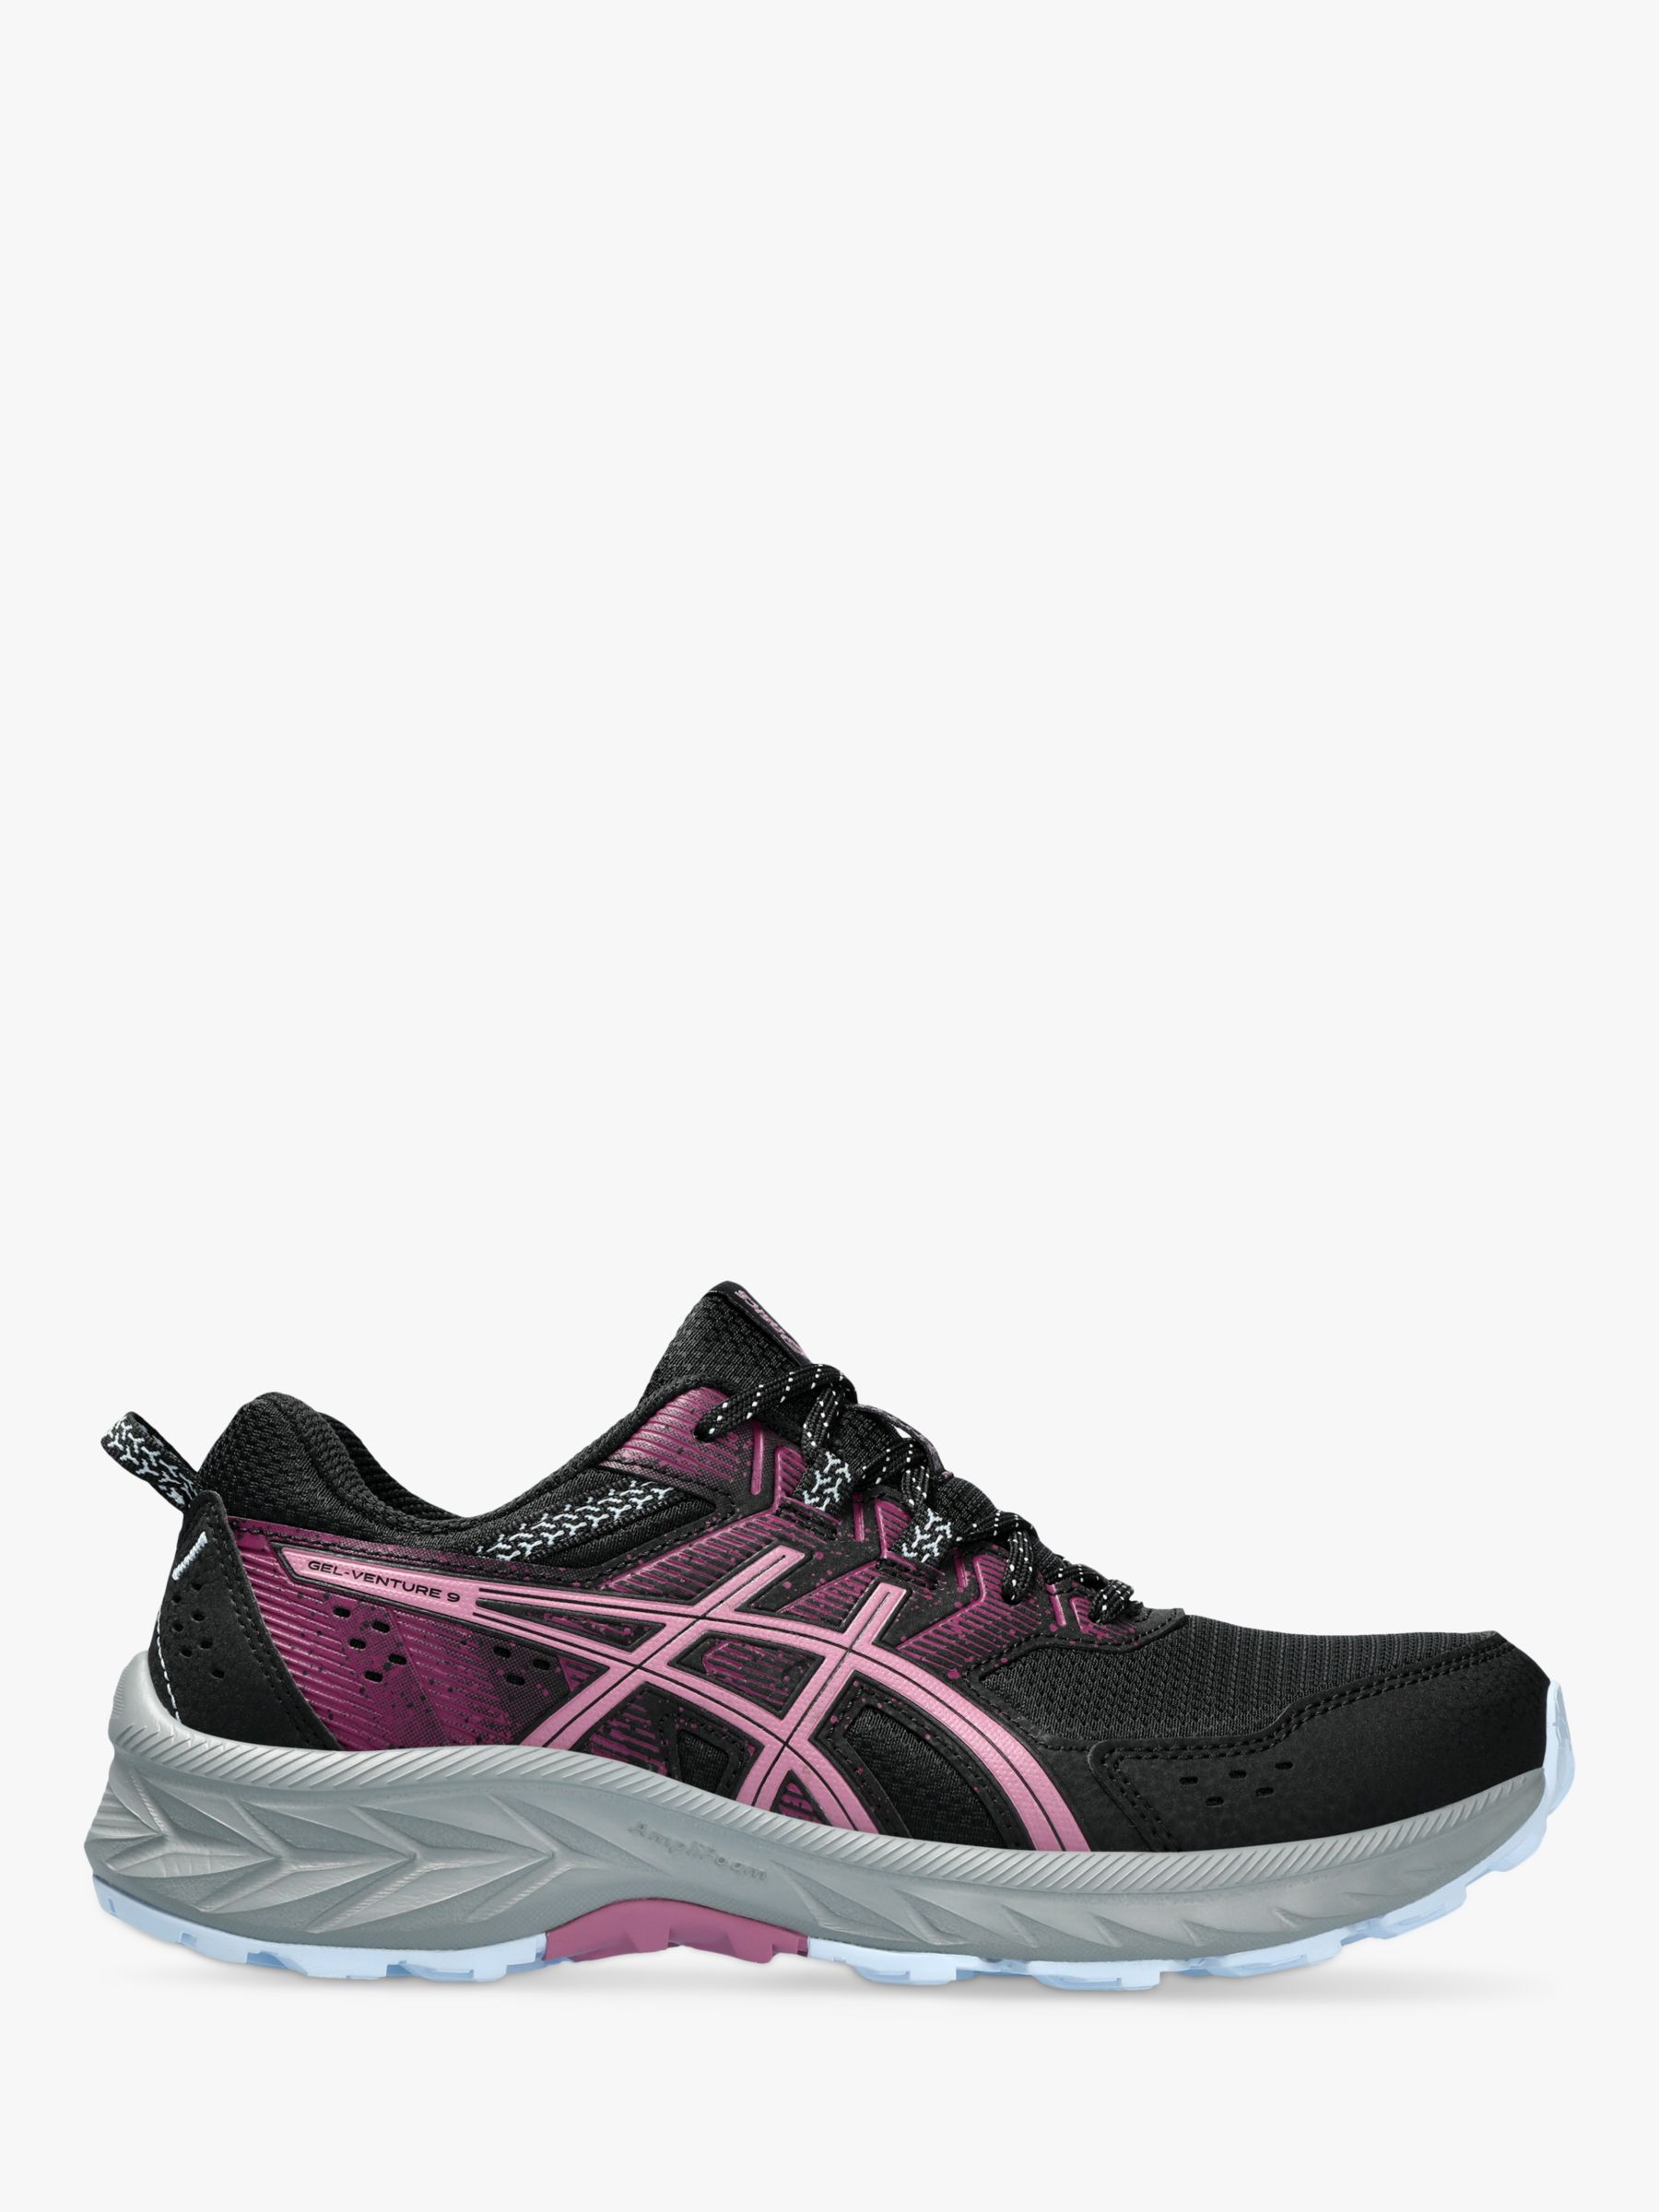 ASICS GEL-VENTURE 9 Women's Trail Running Shoes, Black/Berry, 4.5